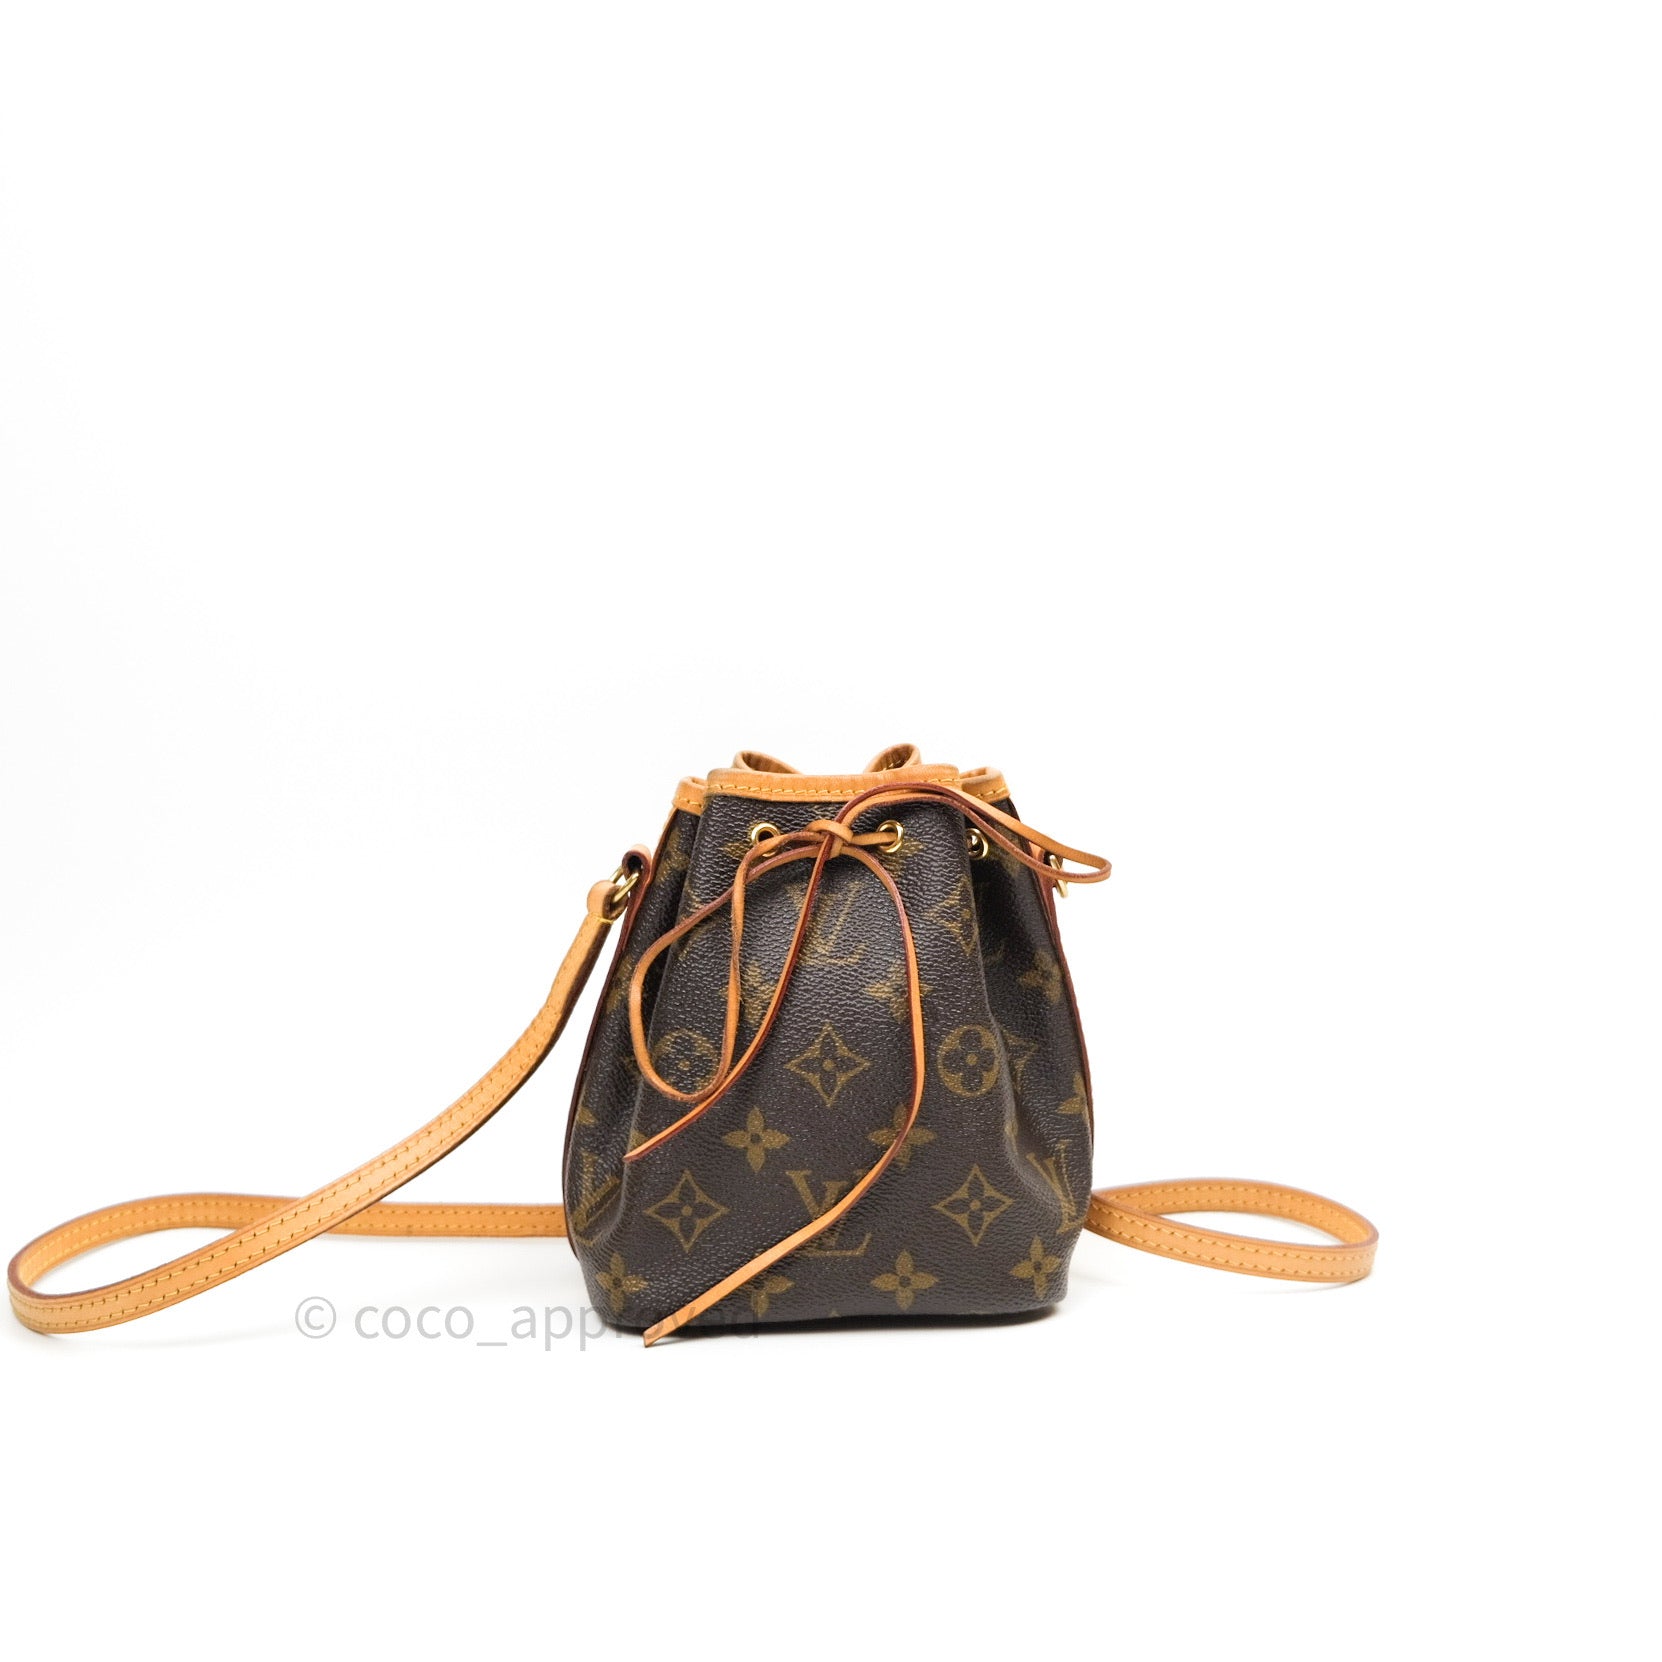 Nano Noe Monogram in Brown - Small Leather Goods M41346, L*V – ZAK BAGS ©️